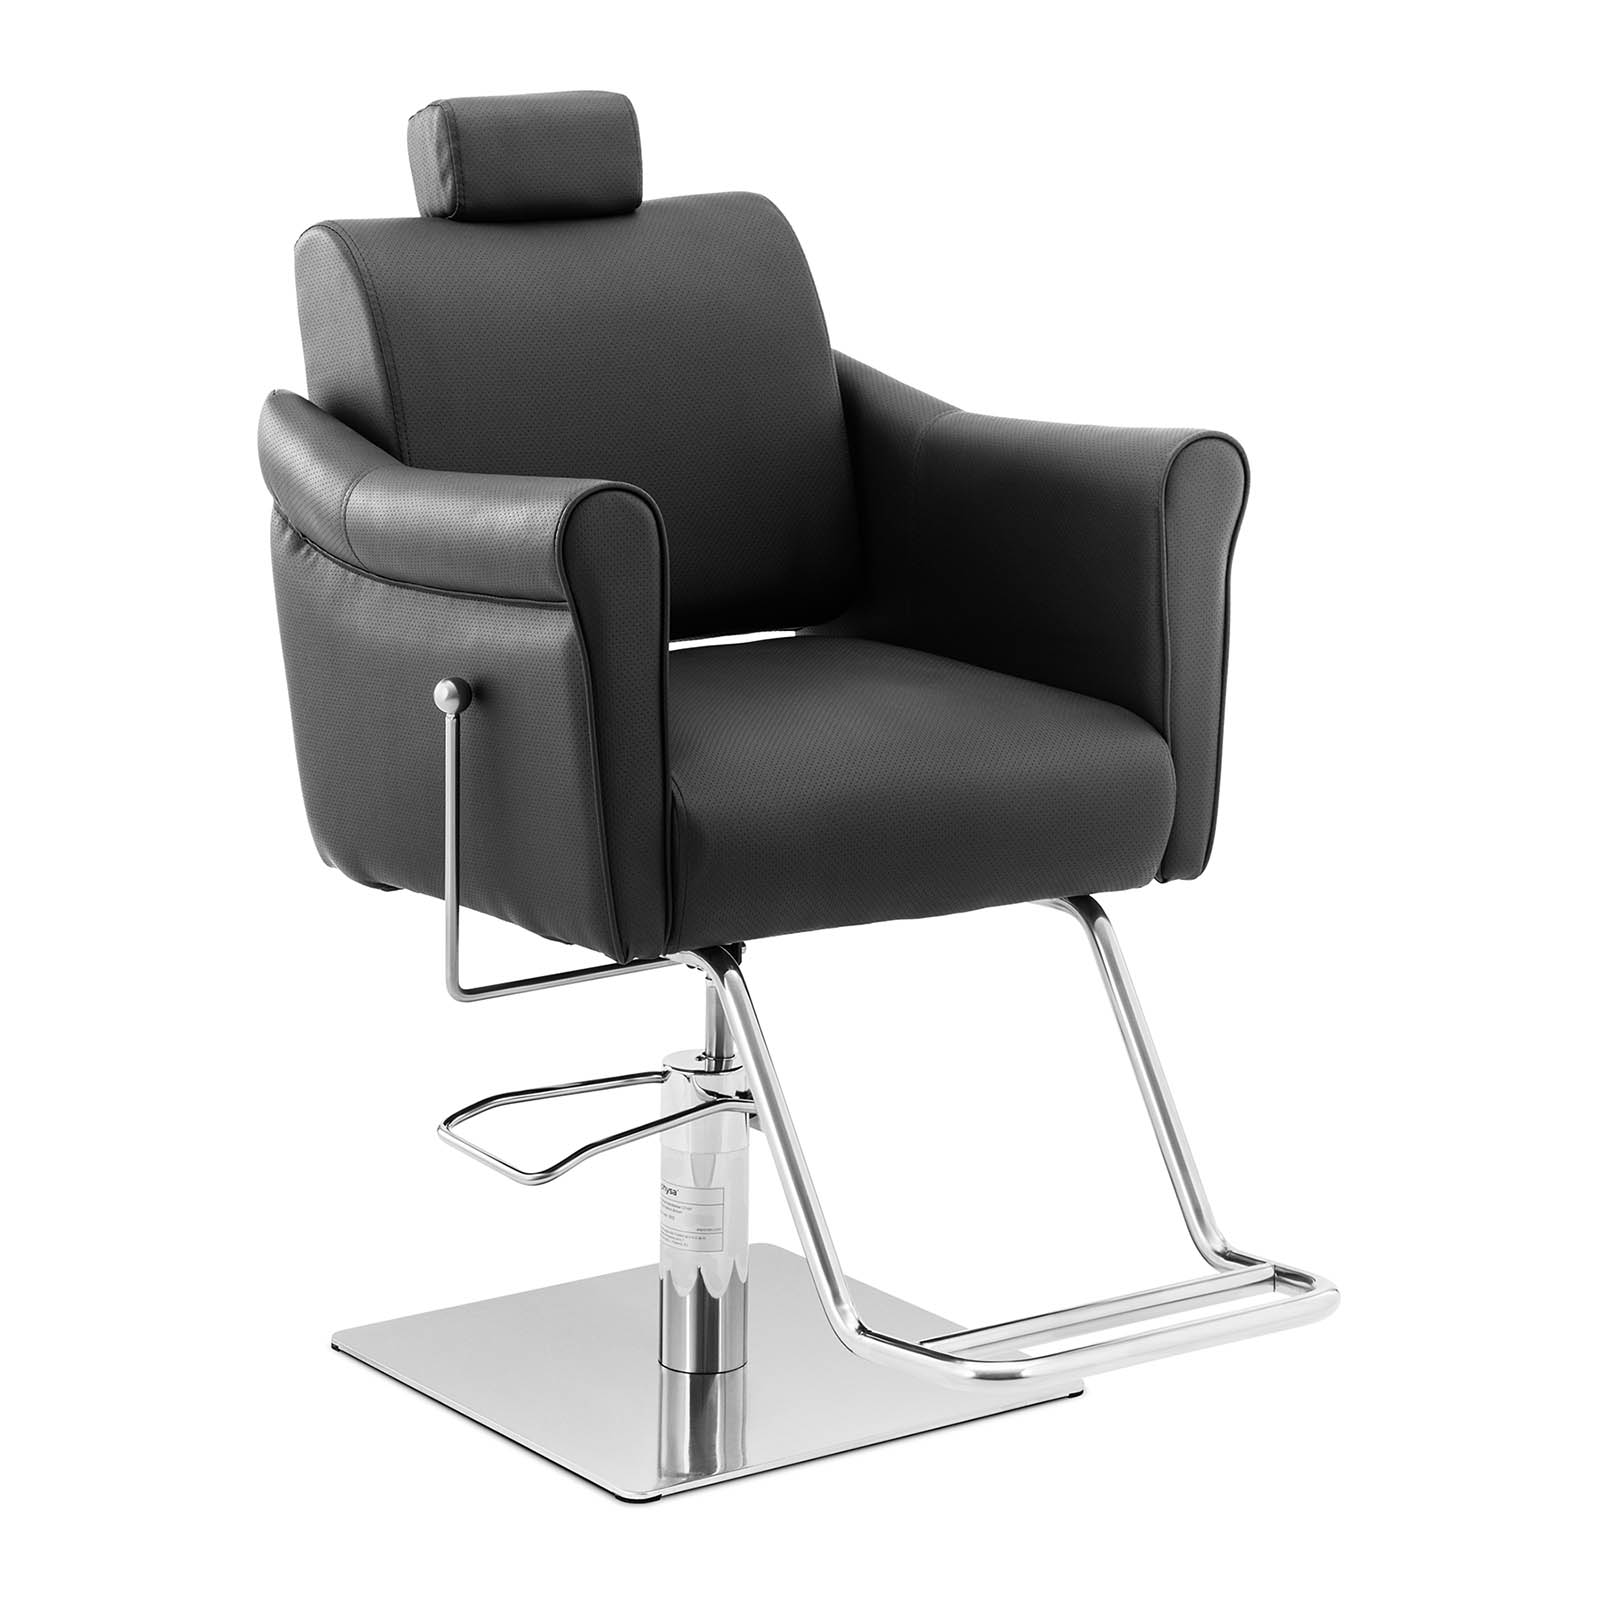 Fotel fryzjerski z podnóżkiem - 1020 - 1170 mm - 200 kg - czarny, srebrny